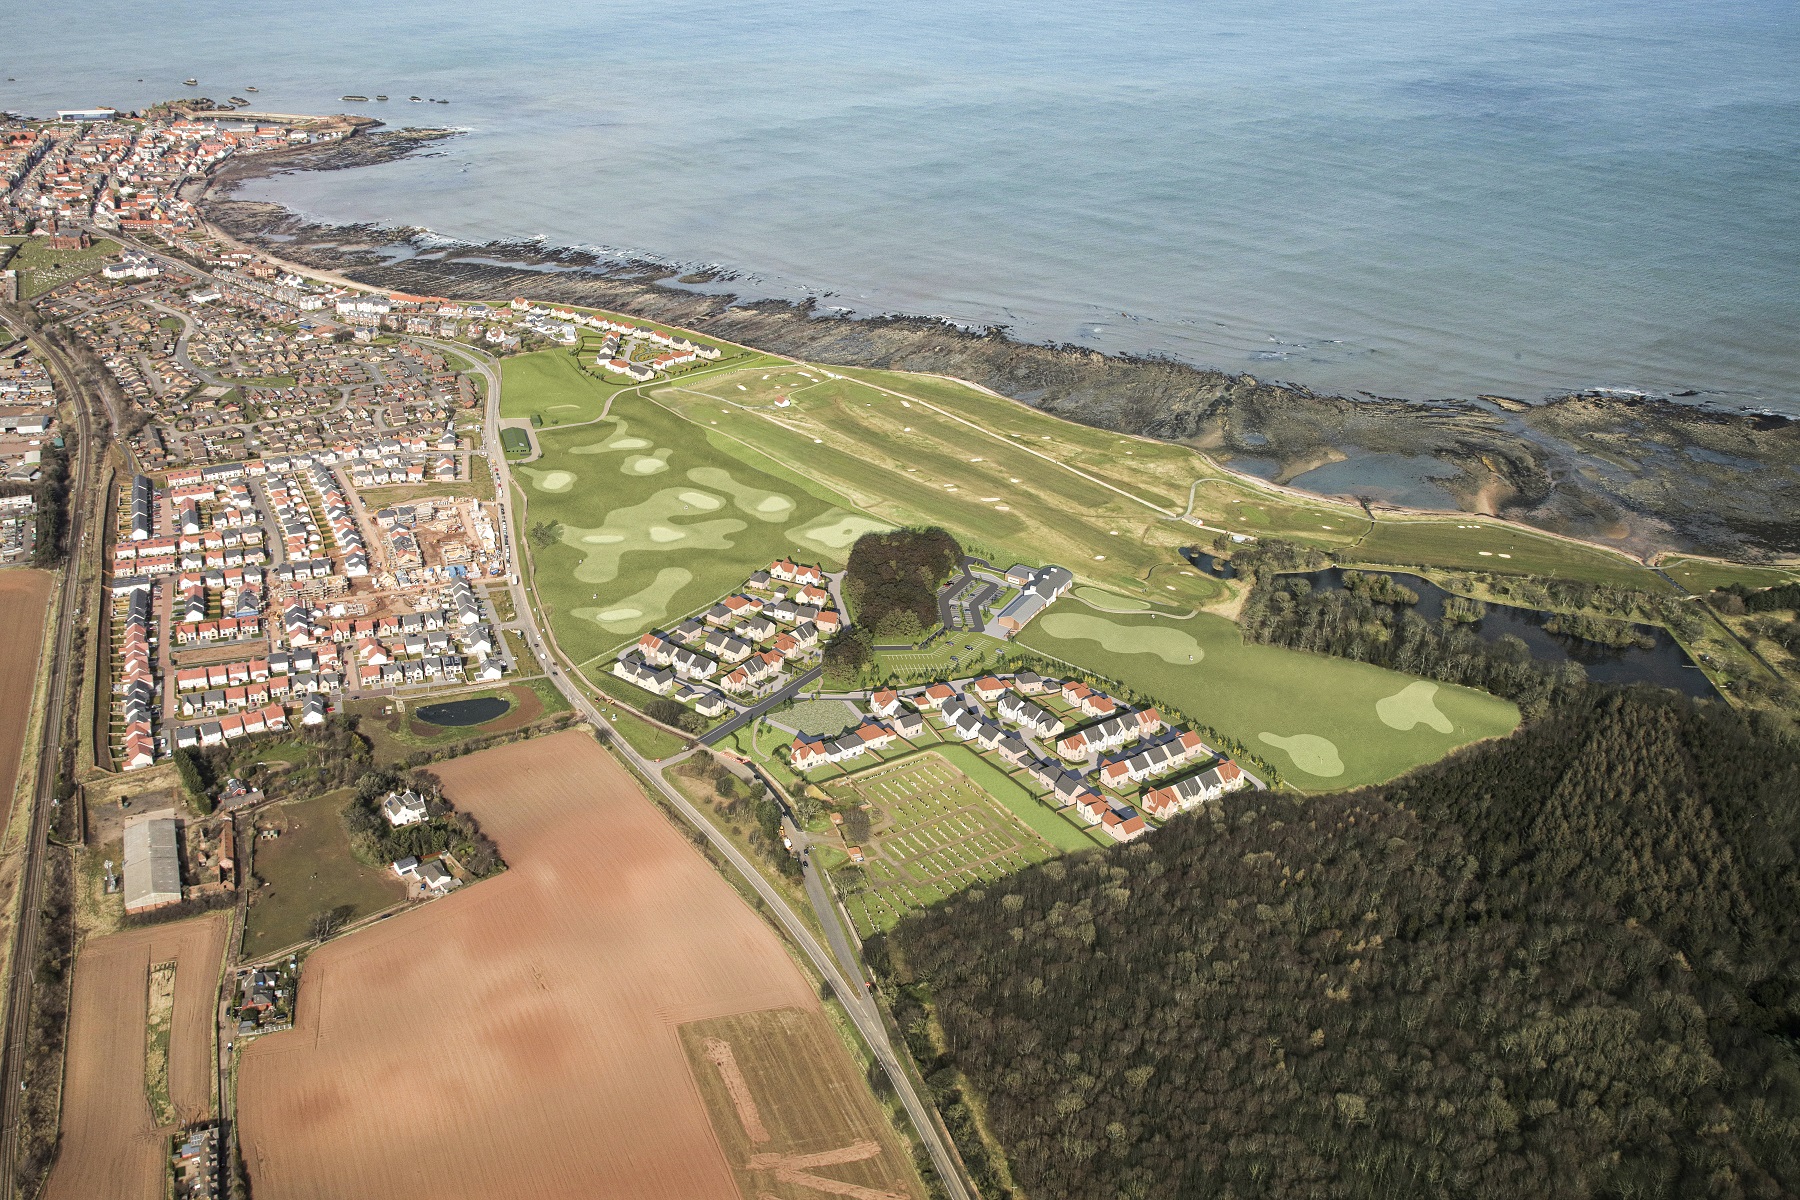 Dunbar Golf Club homes plan approved following NPF4 reassessment